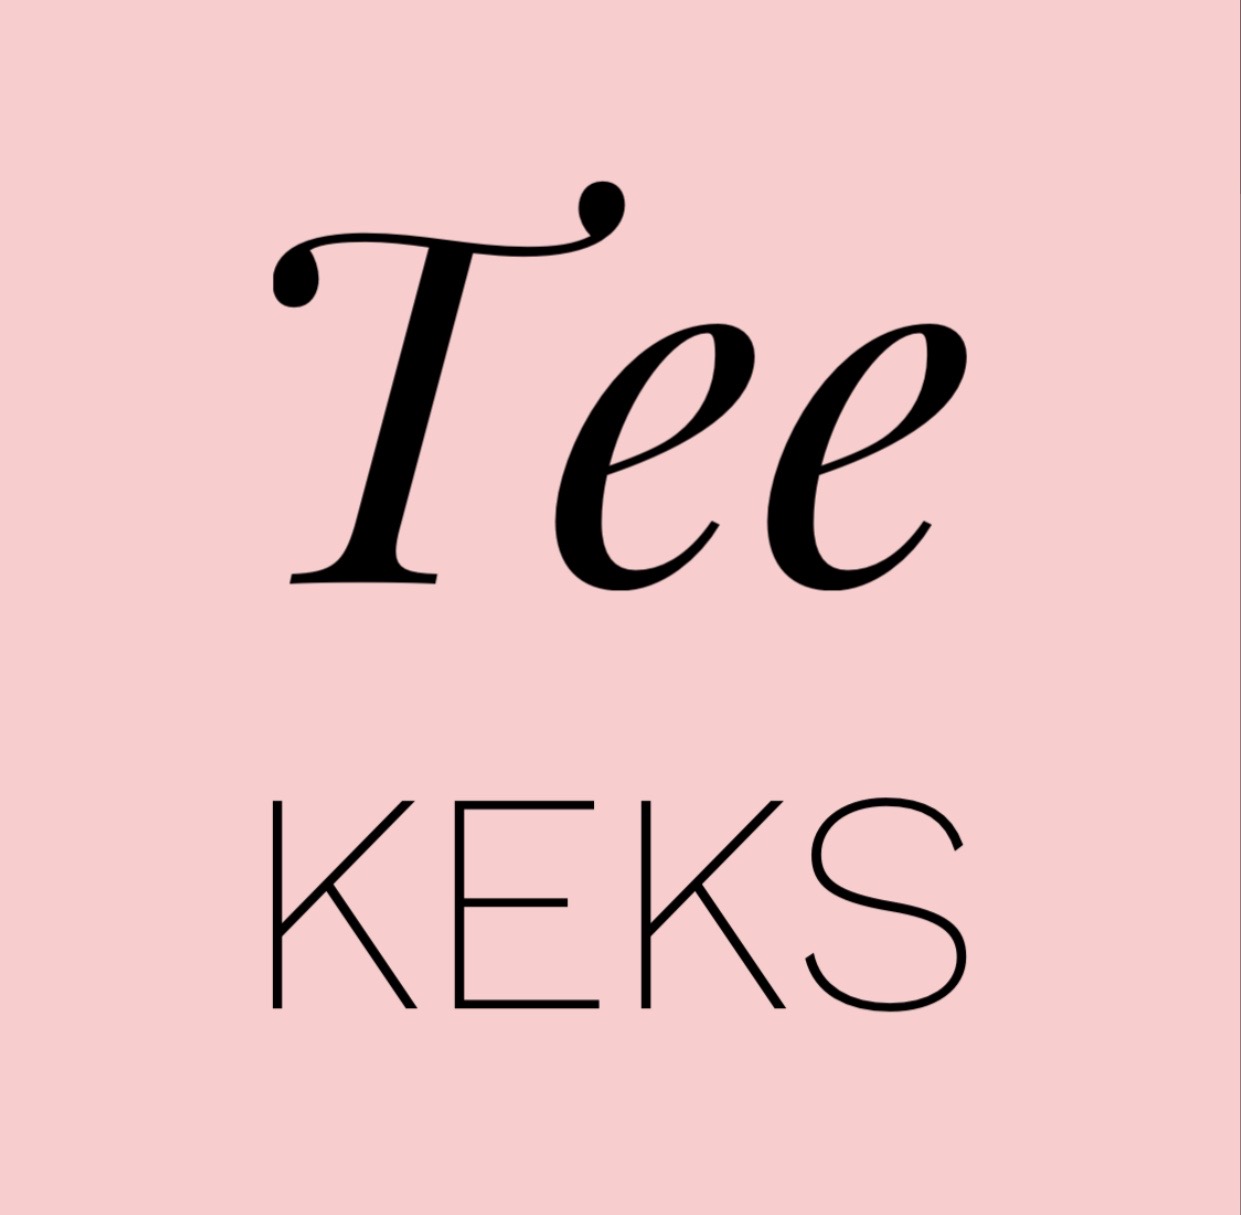 Tee Keks is a luxury cake design company based in Addis Ababa, Ethiopia.